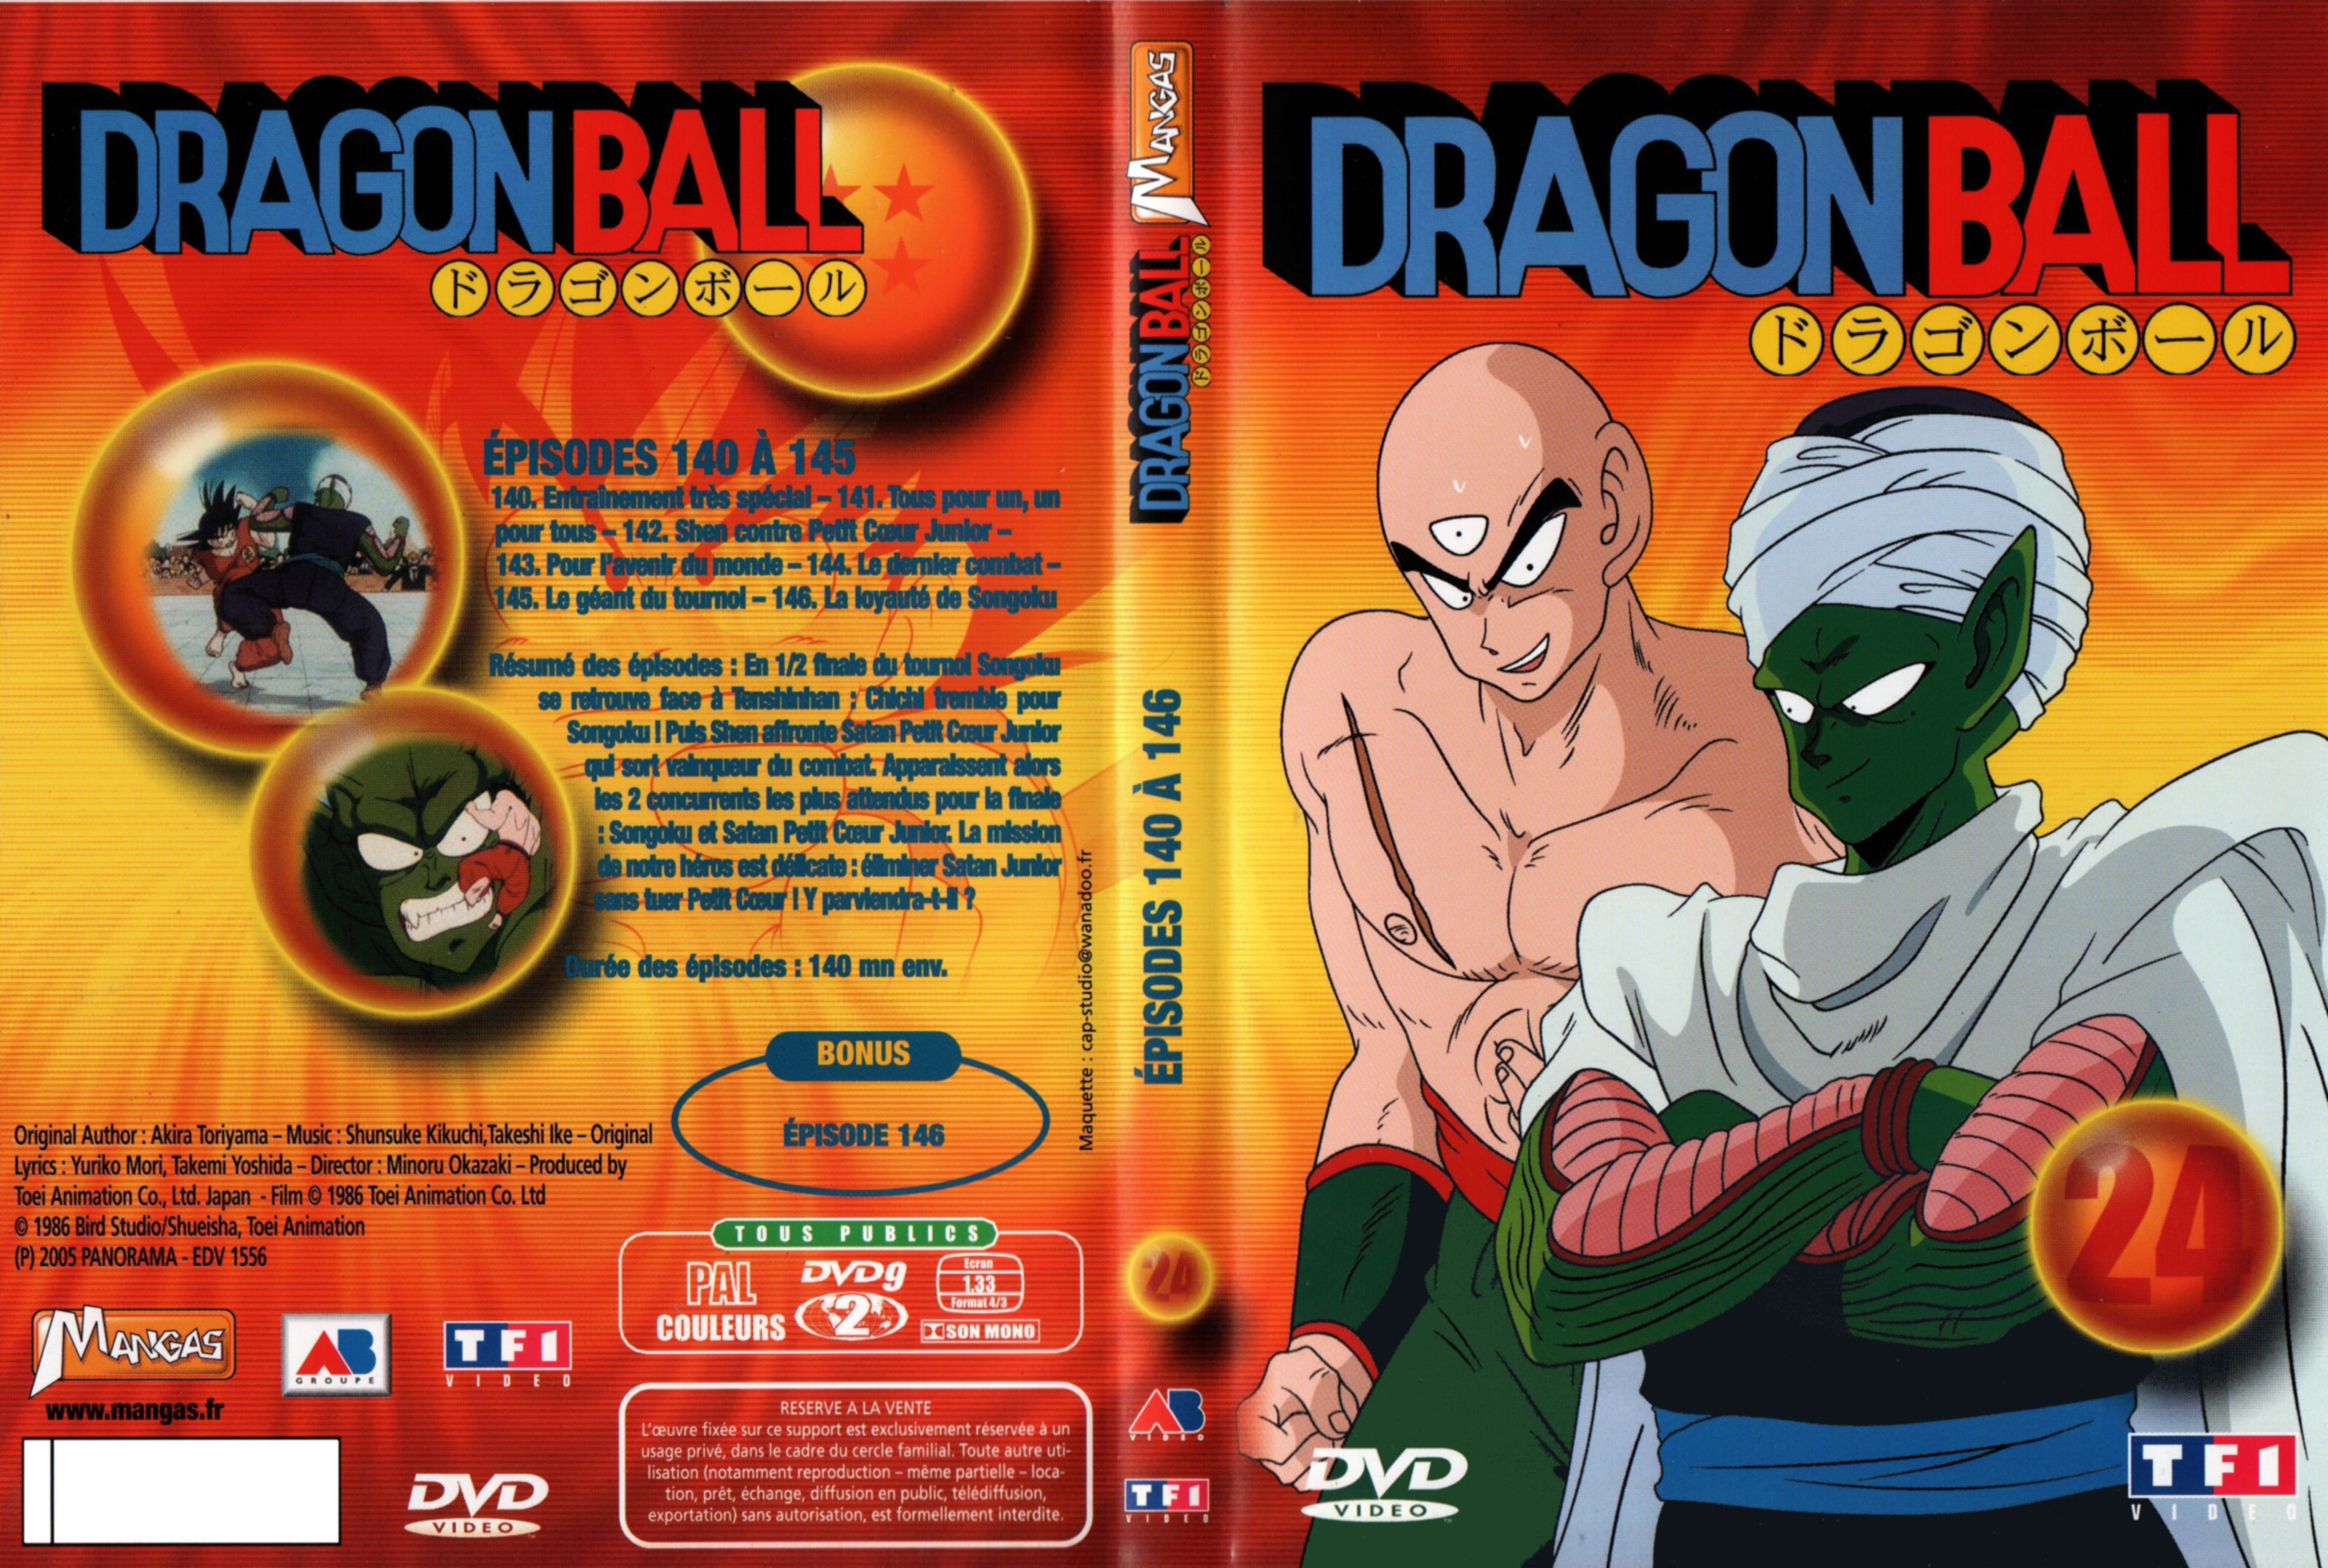 Jaquette DVD Dragon Ball vol 24 v2